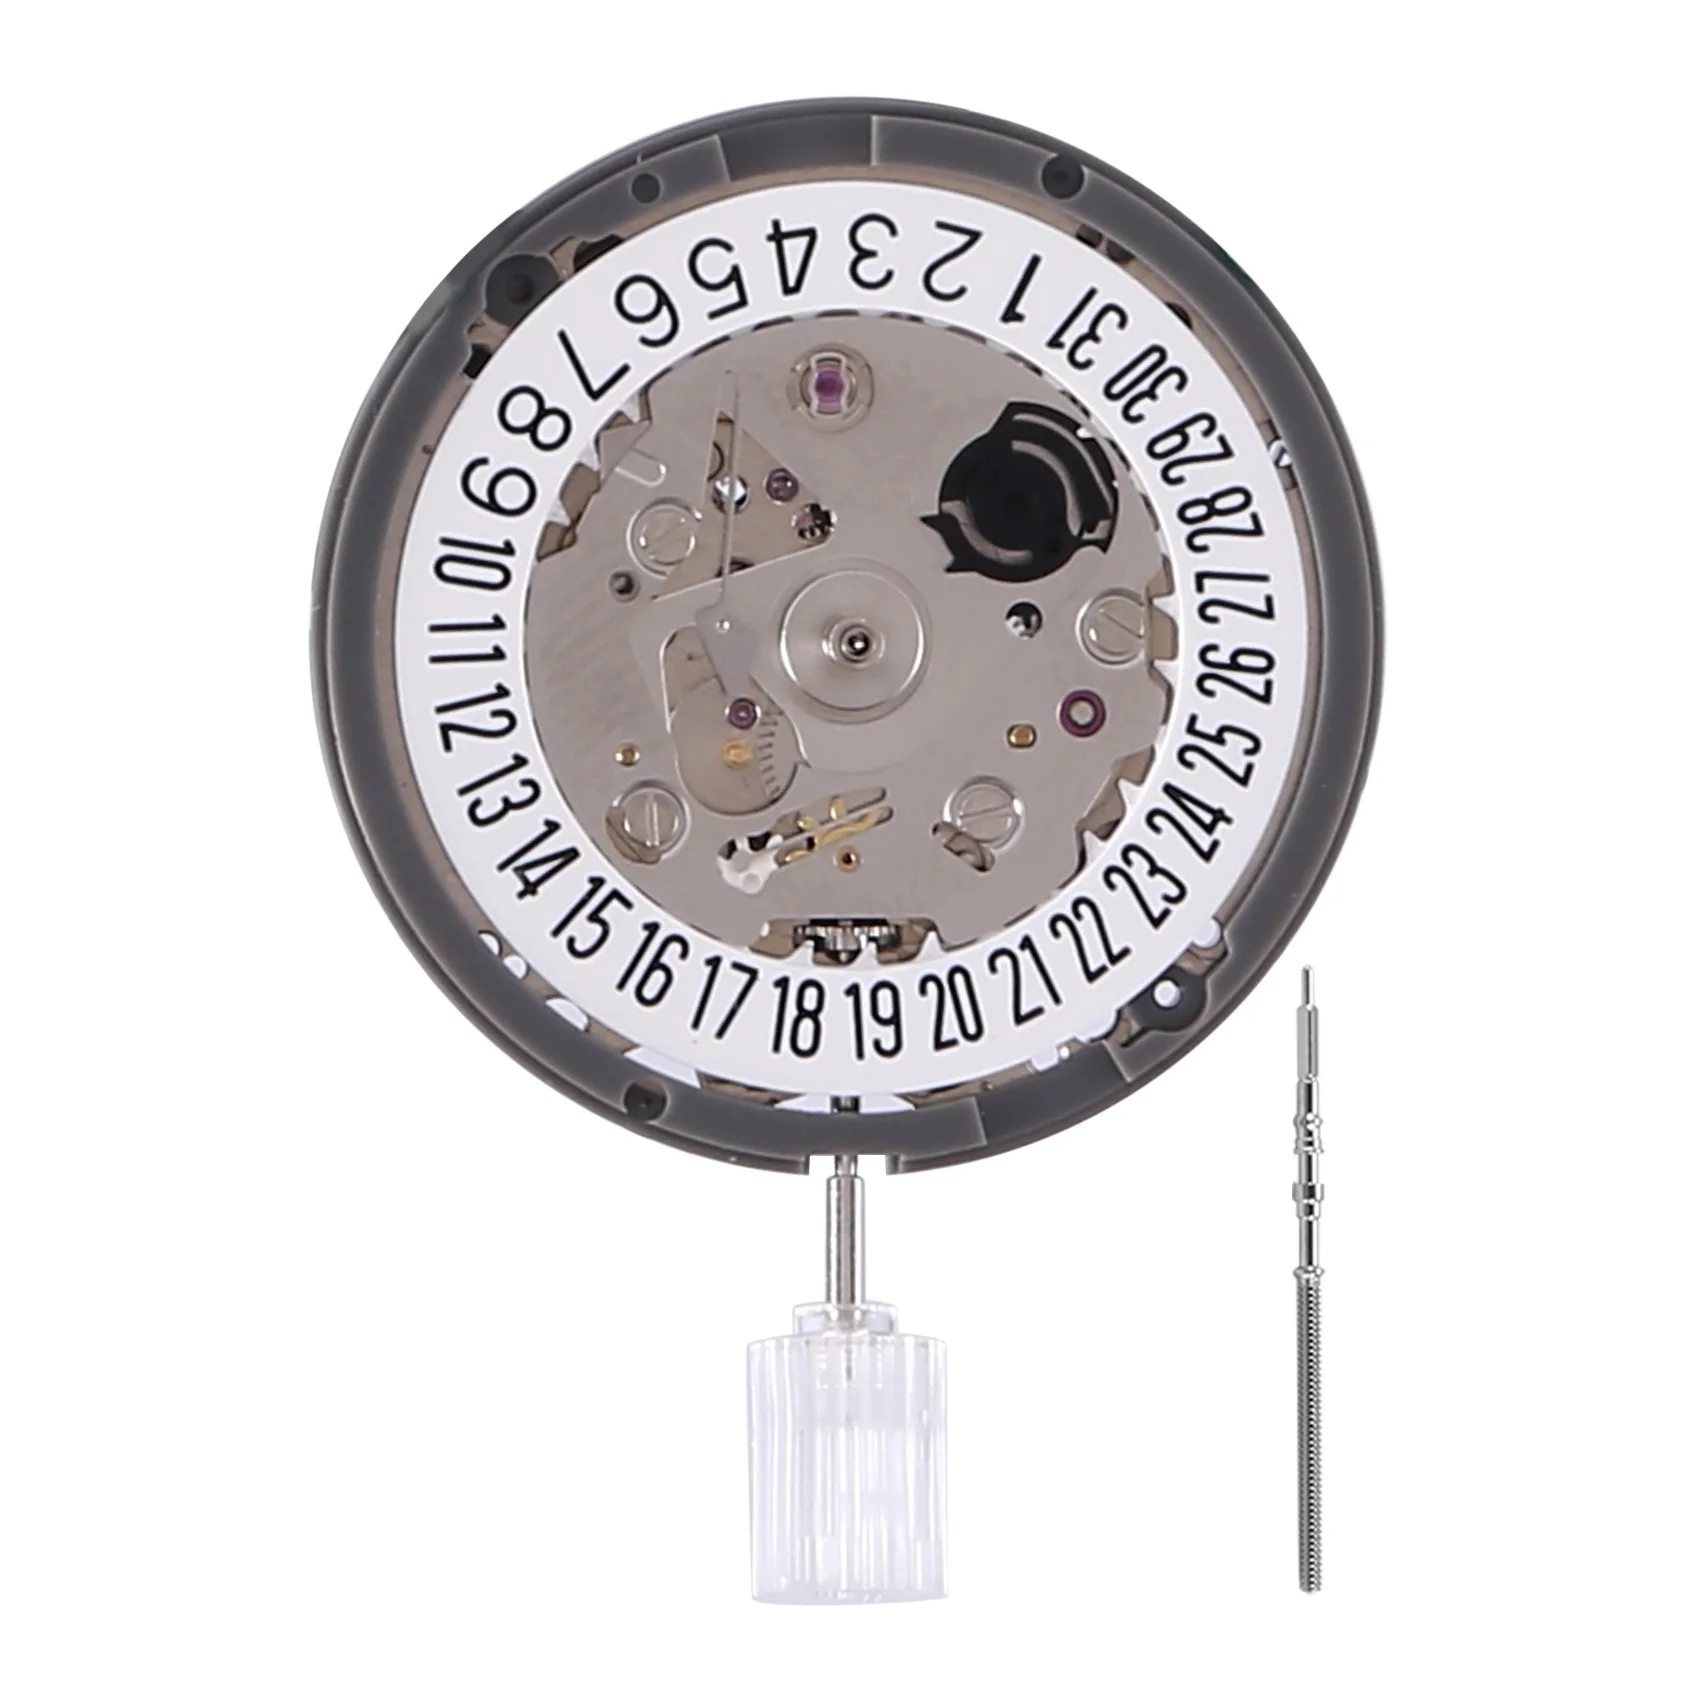 

24 Jewels NH35A NH35 6 O'Clock Automatic Mechanical Watch Movement 21600Bph Black Date Window